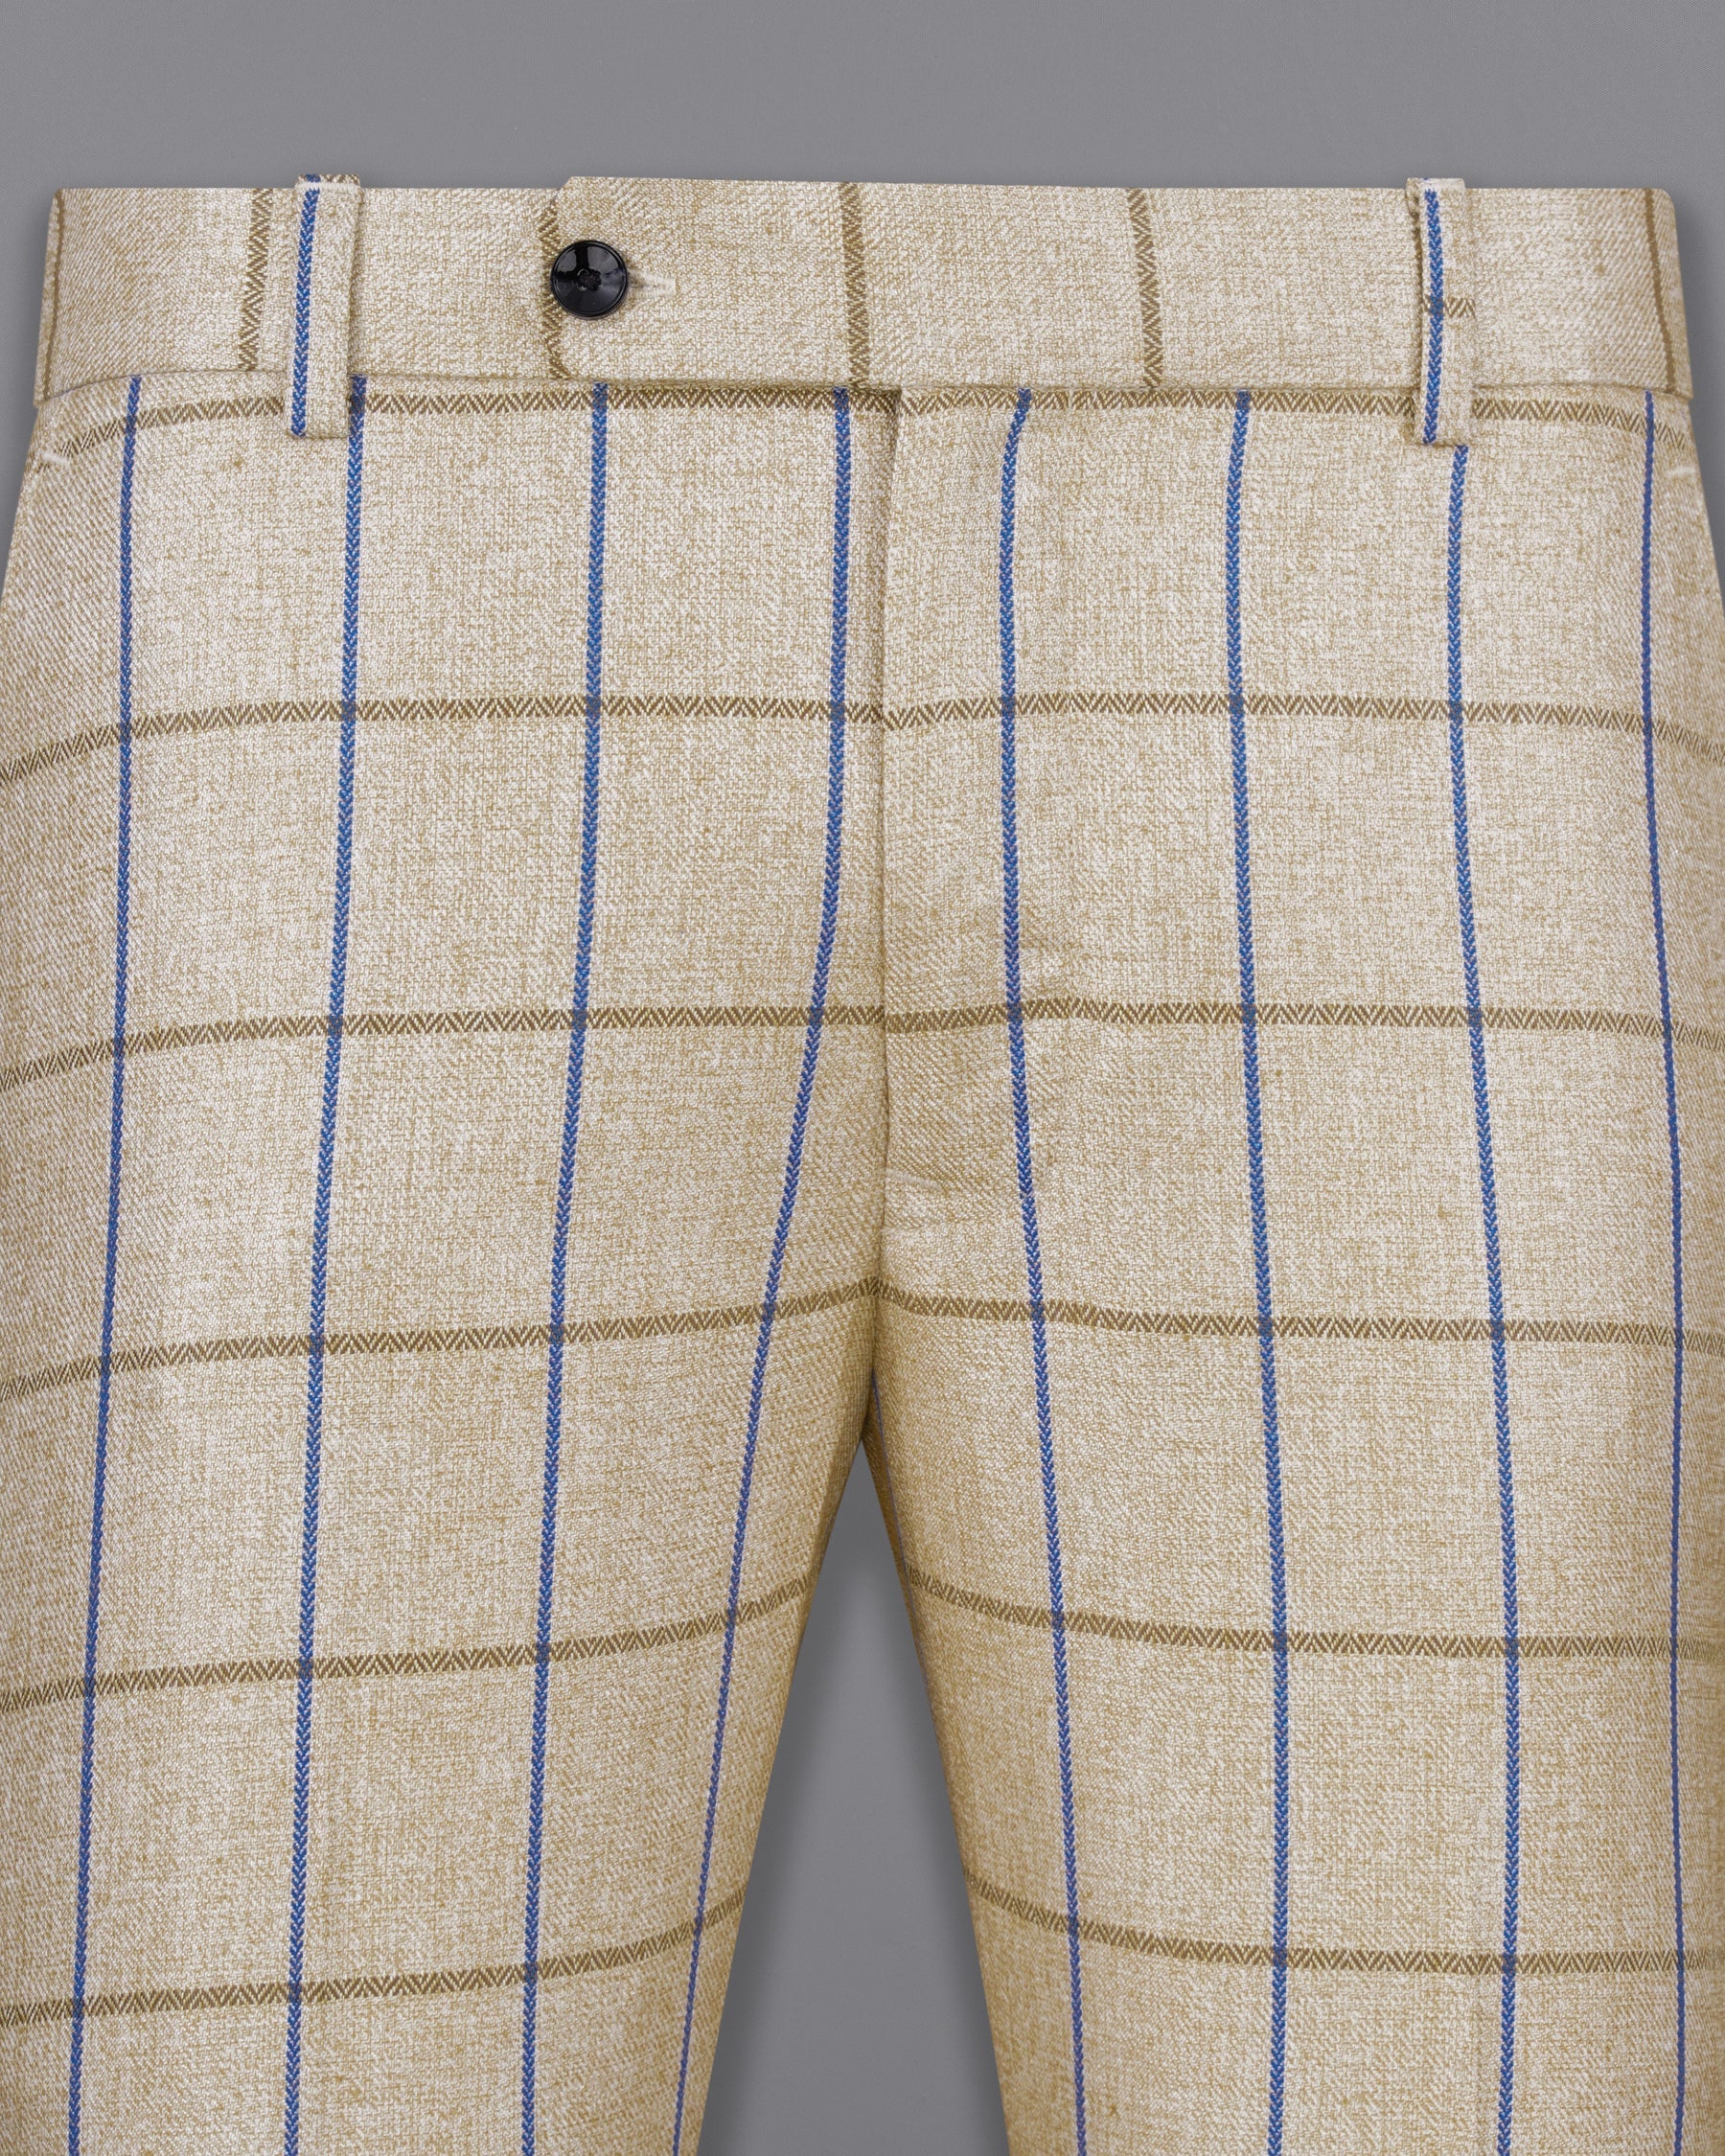 Loro Piana Men's Slim Sport Cotton Dyed Trousers - Bergdorf Goodman